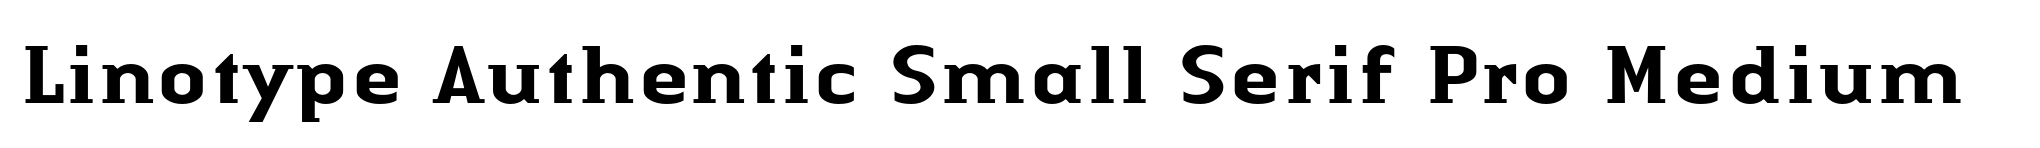 Linotype Authentic Small Serif Pro Medium image